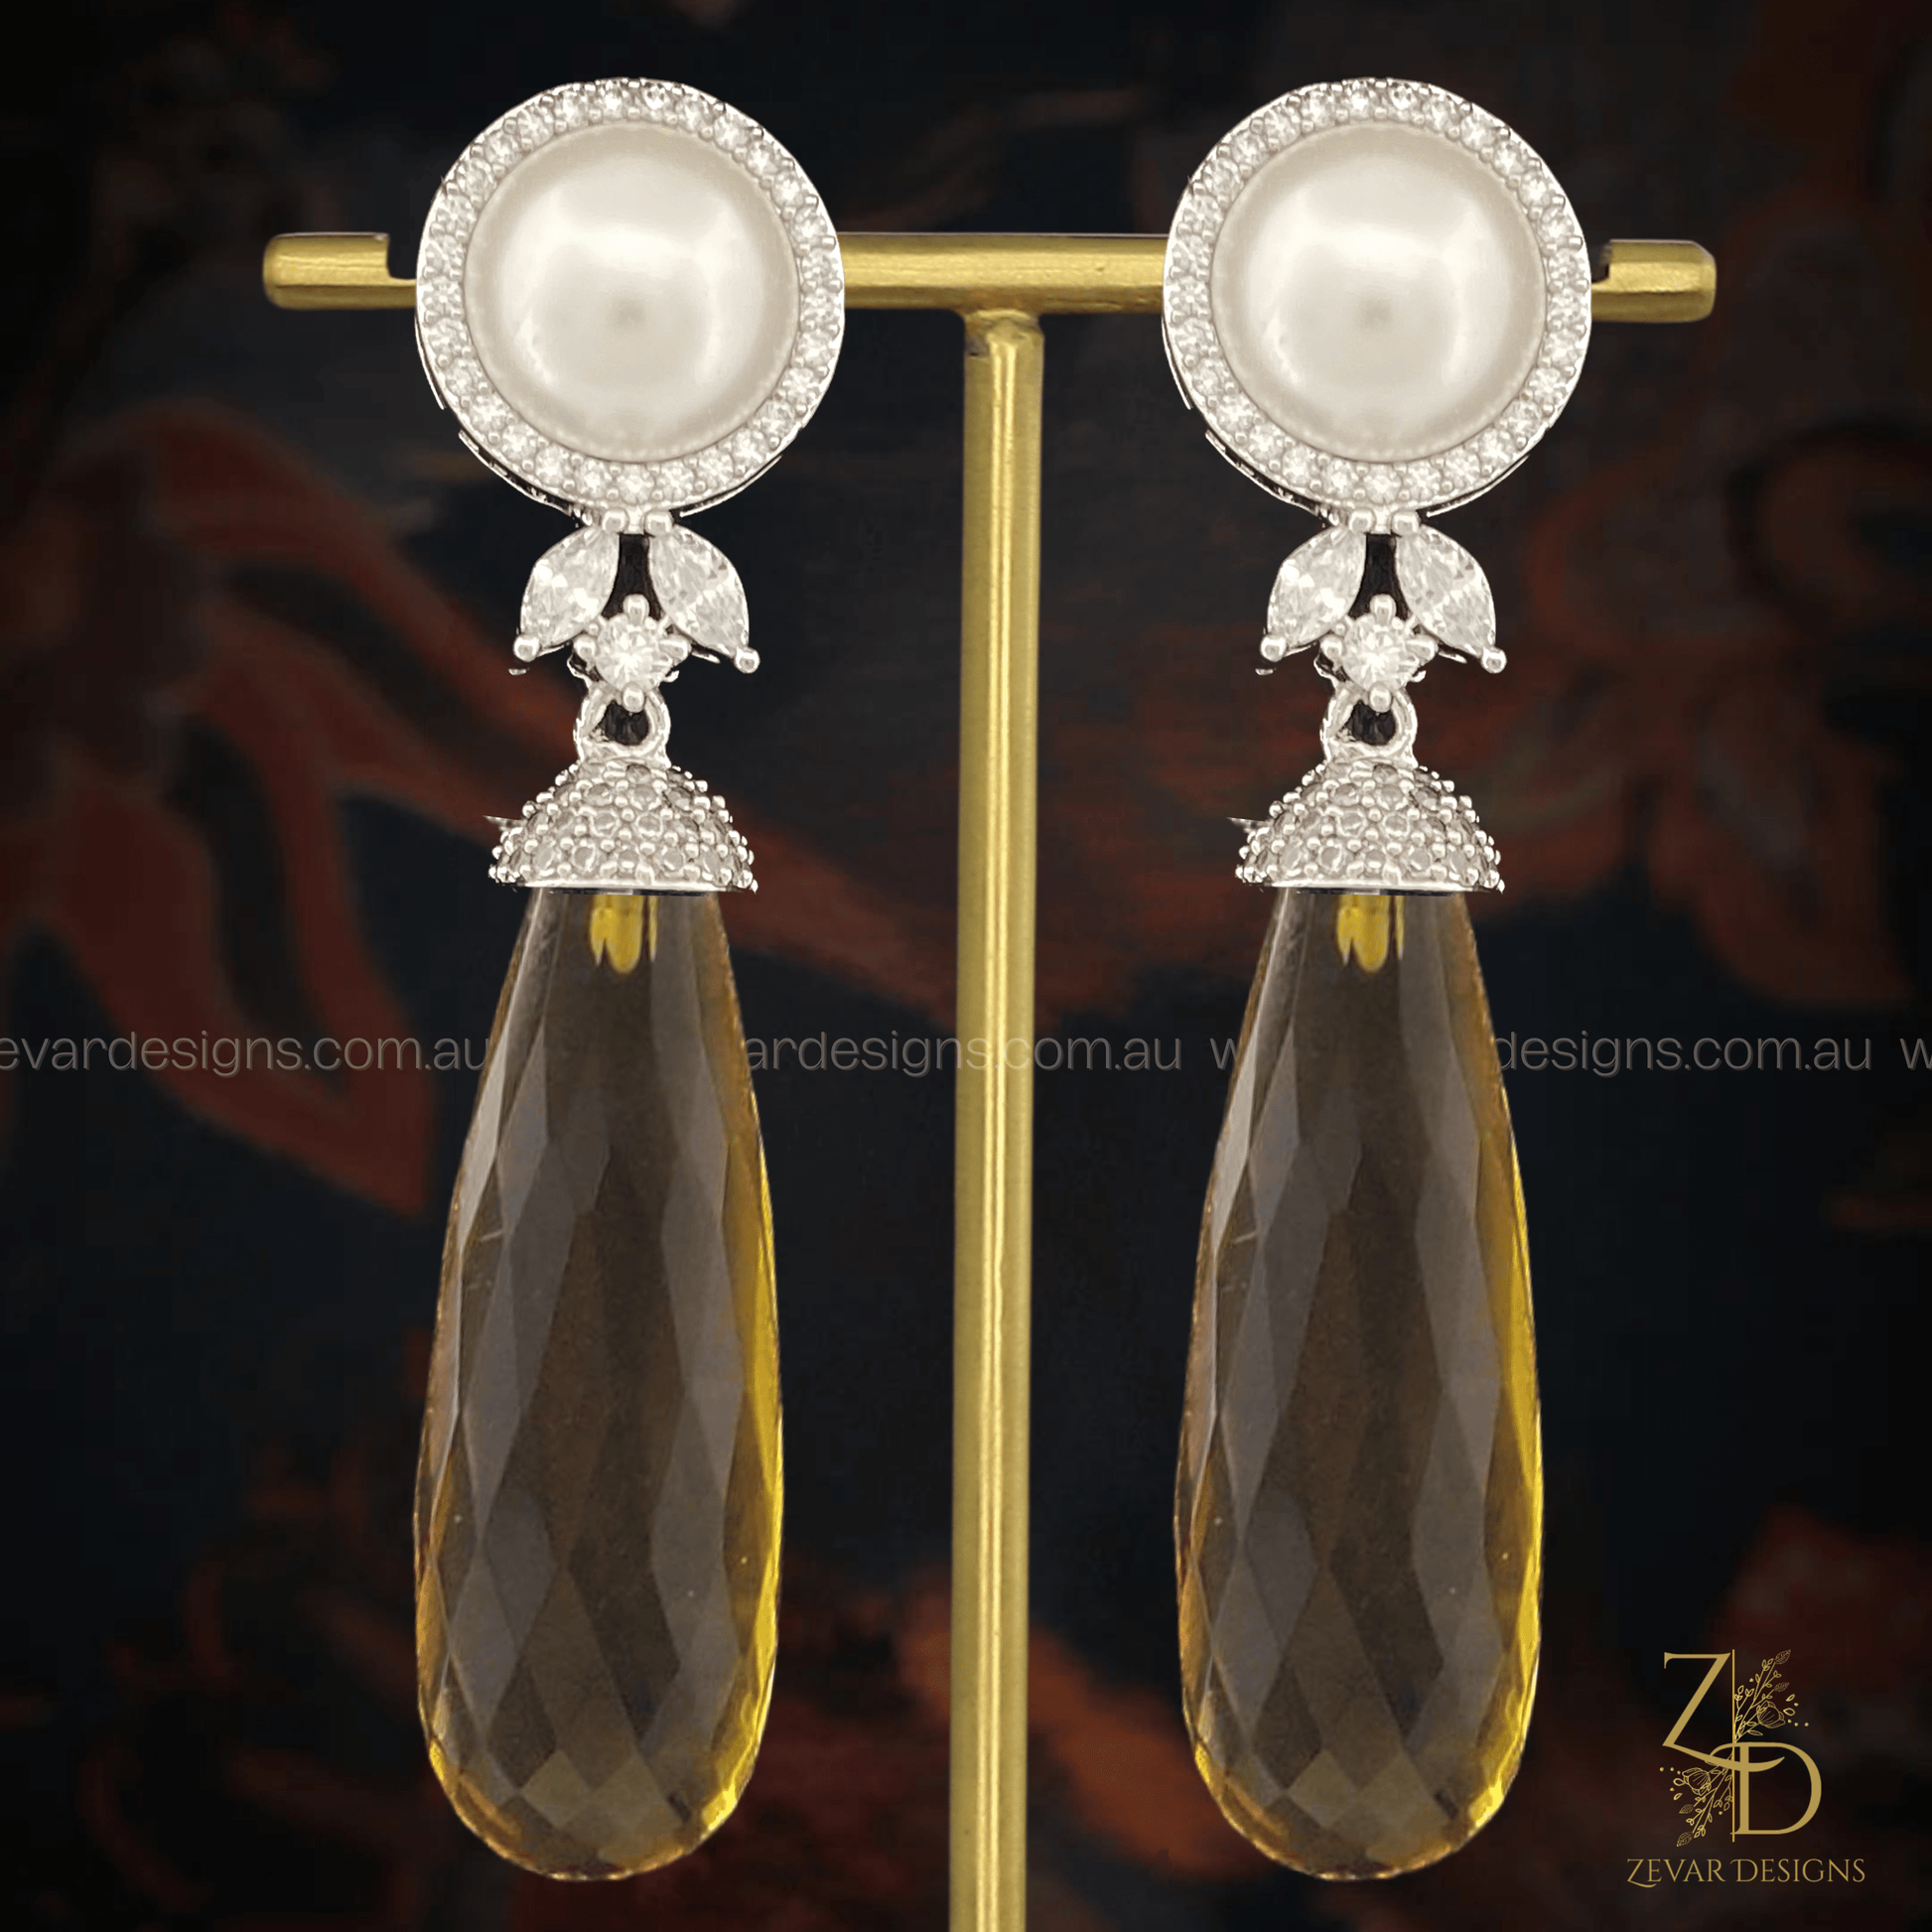 Zevar Designs Indo-Western Earrings Pearl & AD Dangle Earrings